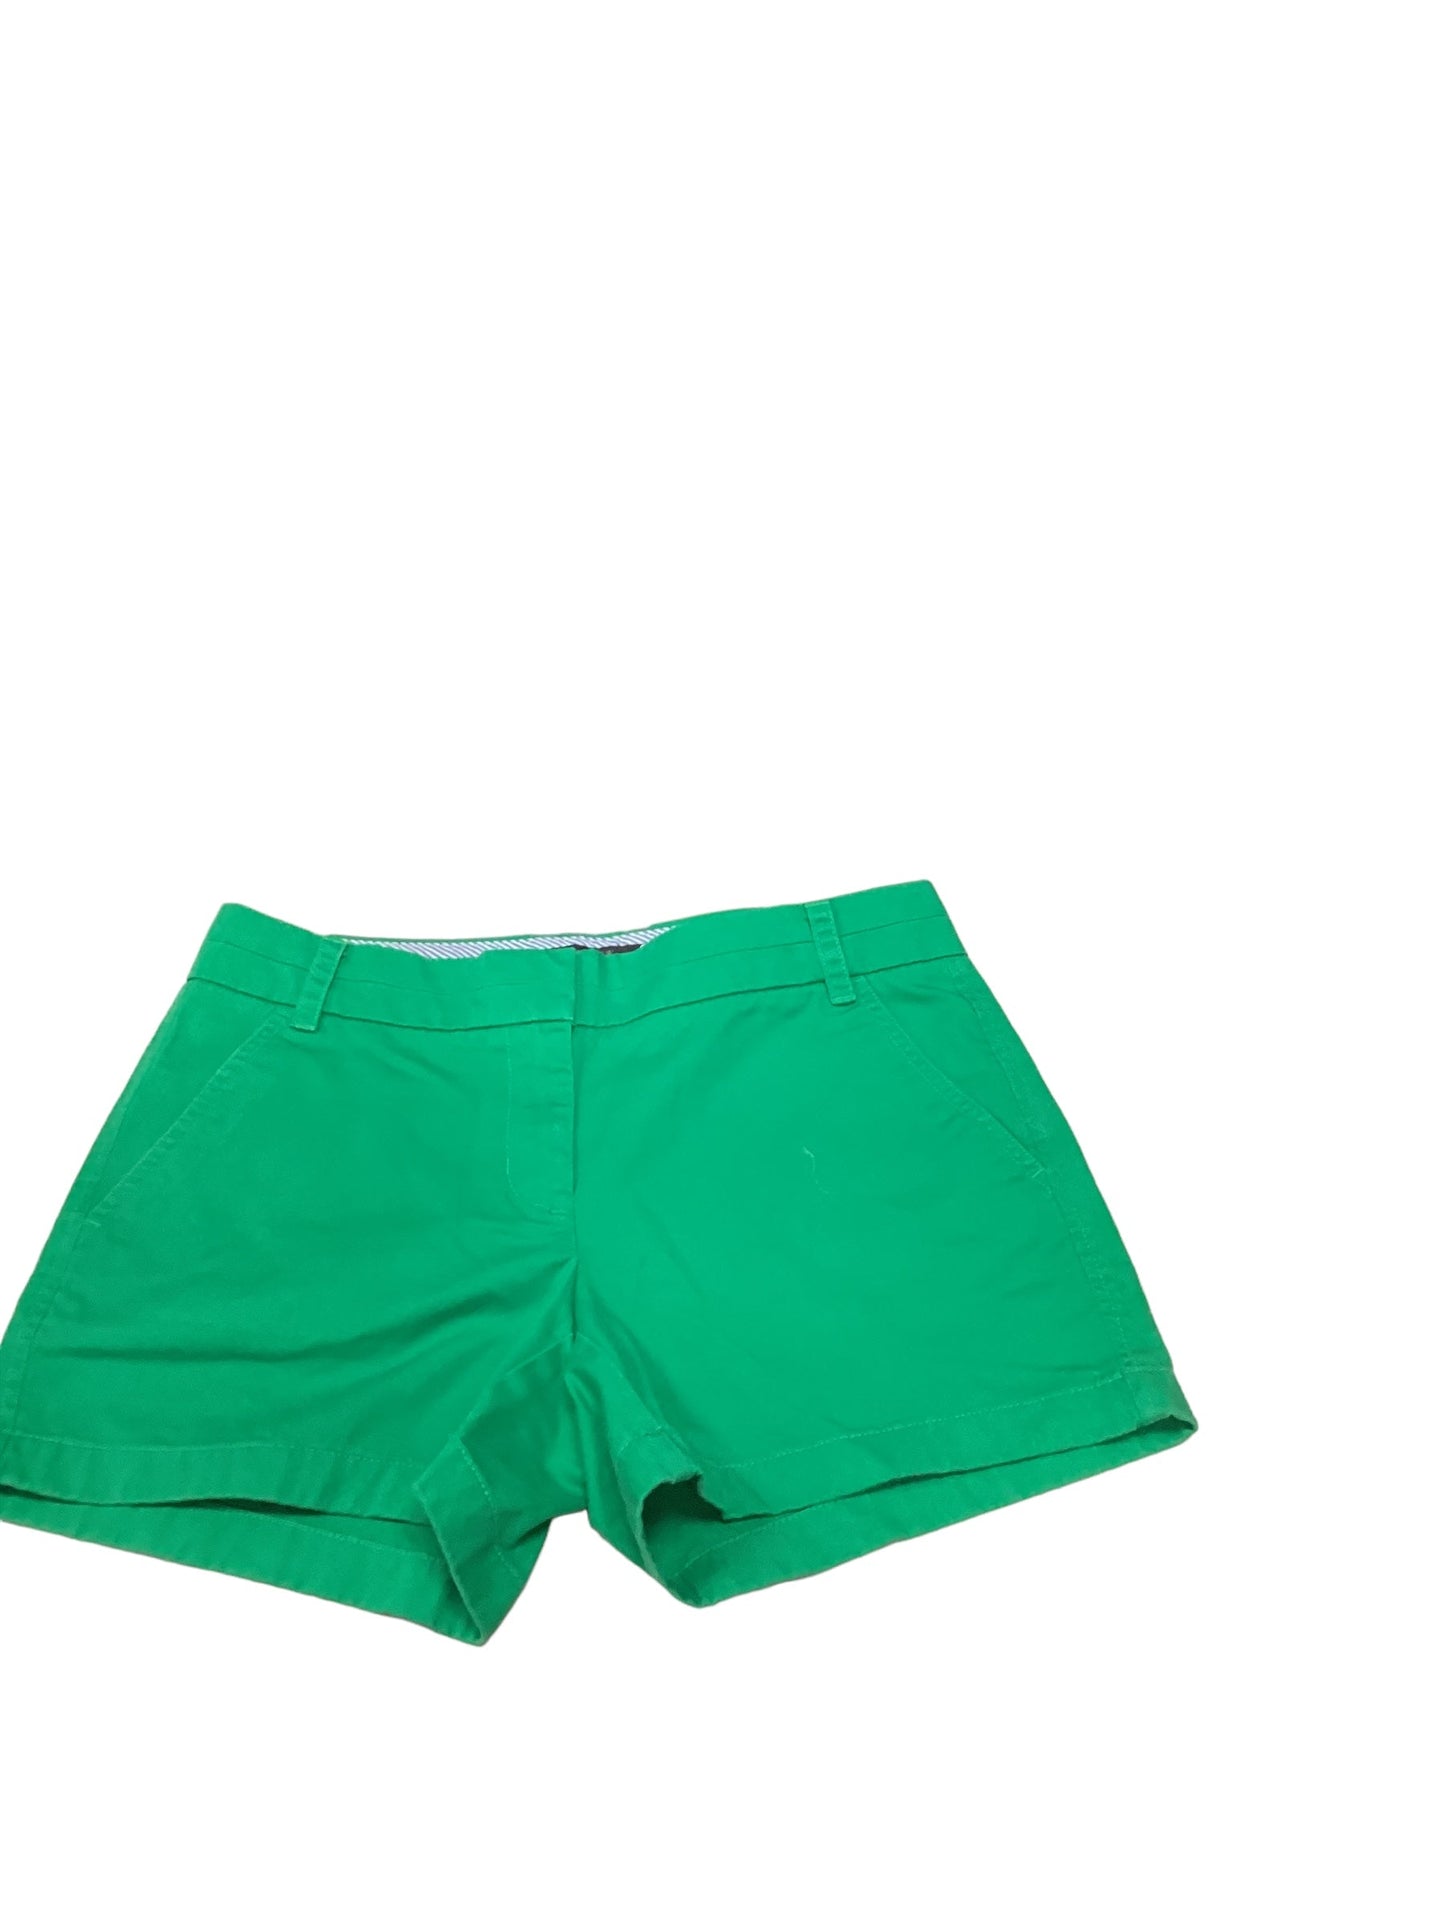 Green Shorts J. Crew, Size L